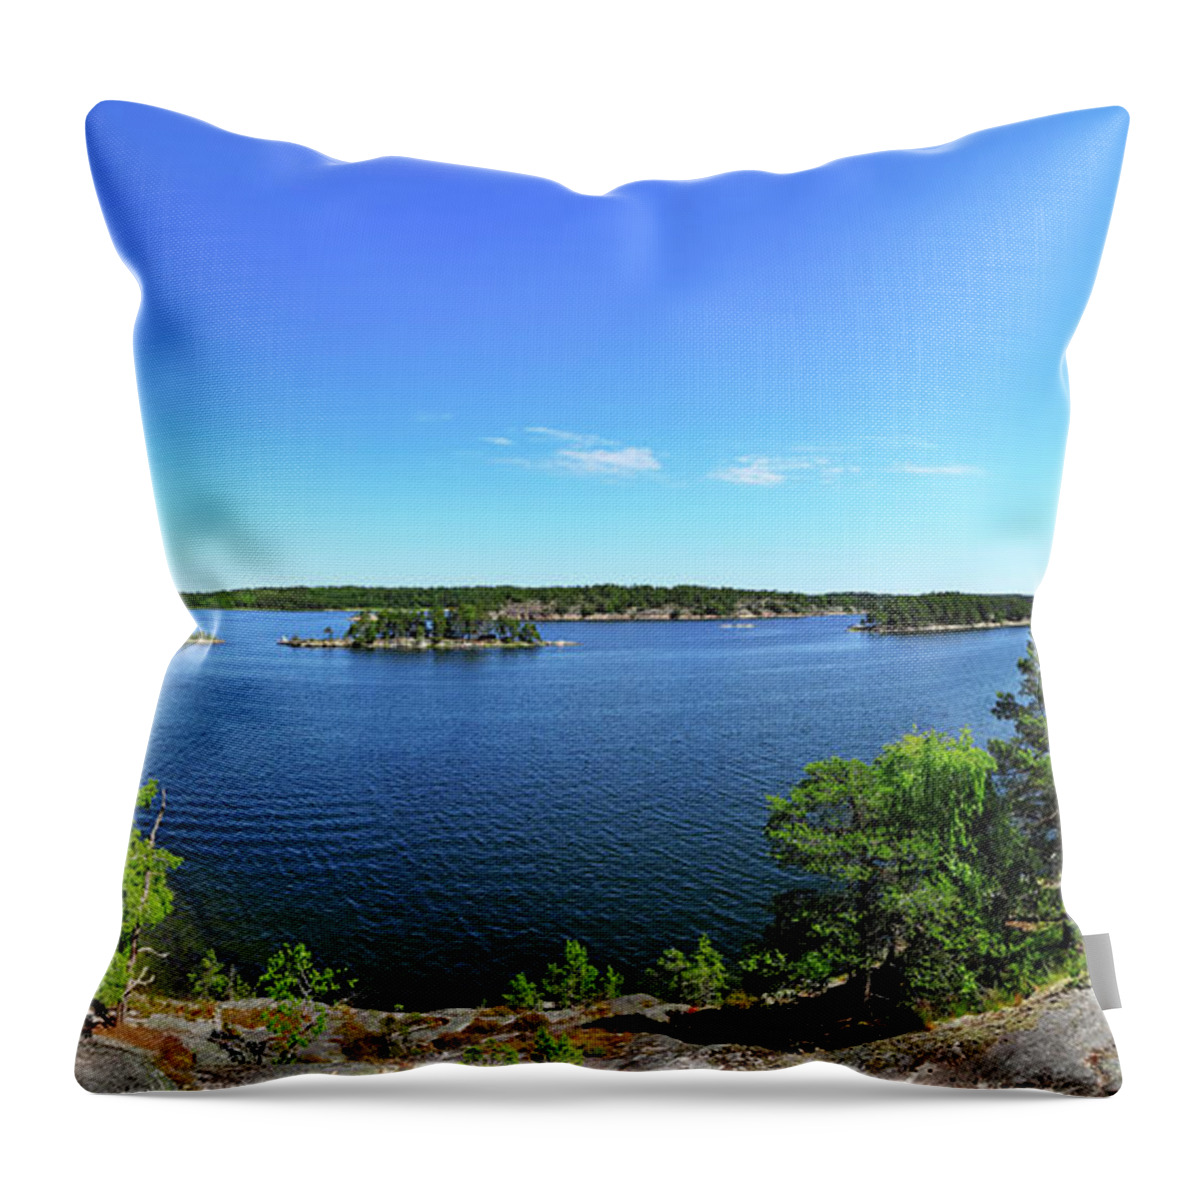 Archipelago Throw Pillow featuring the photograph Stockholm Archipelago by Rusm